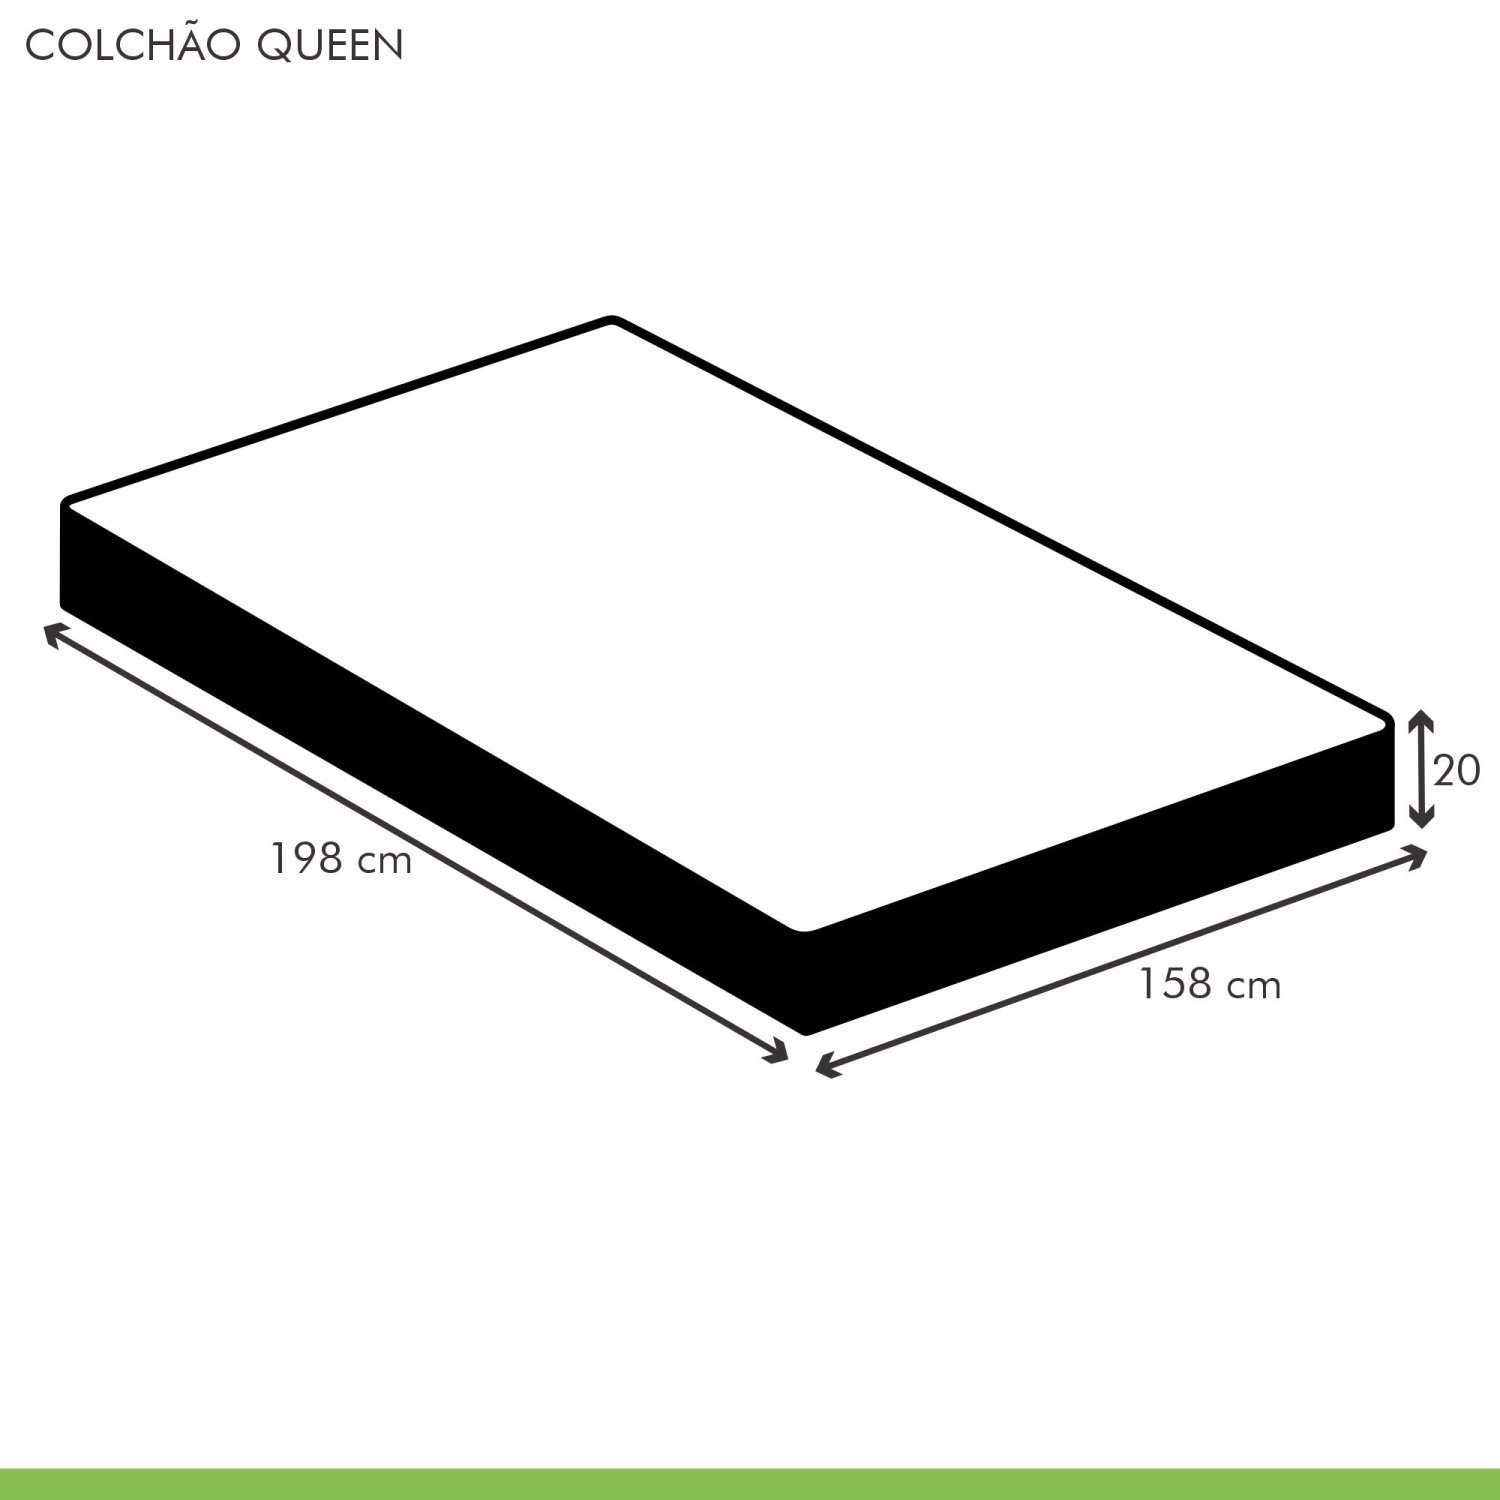 Colchão Queen Quality Plus Duoface 20x158x198cm  - 5